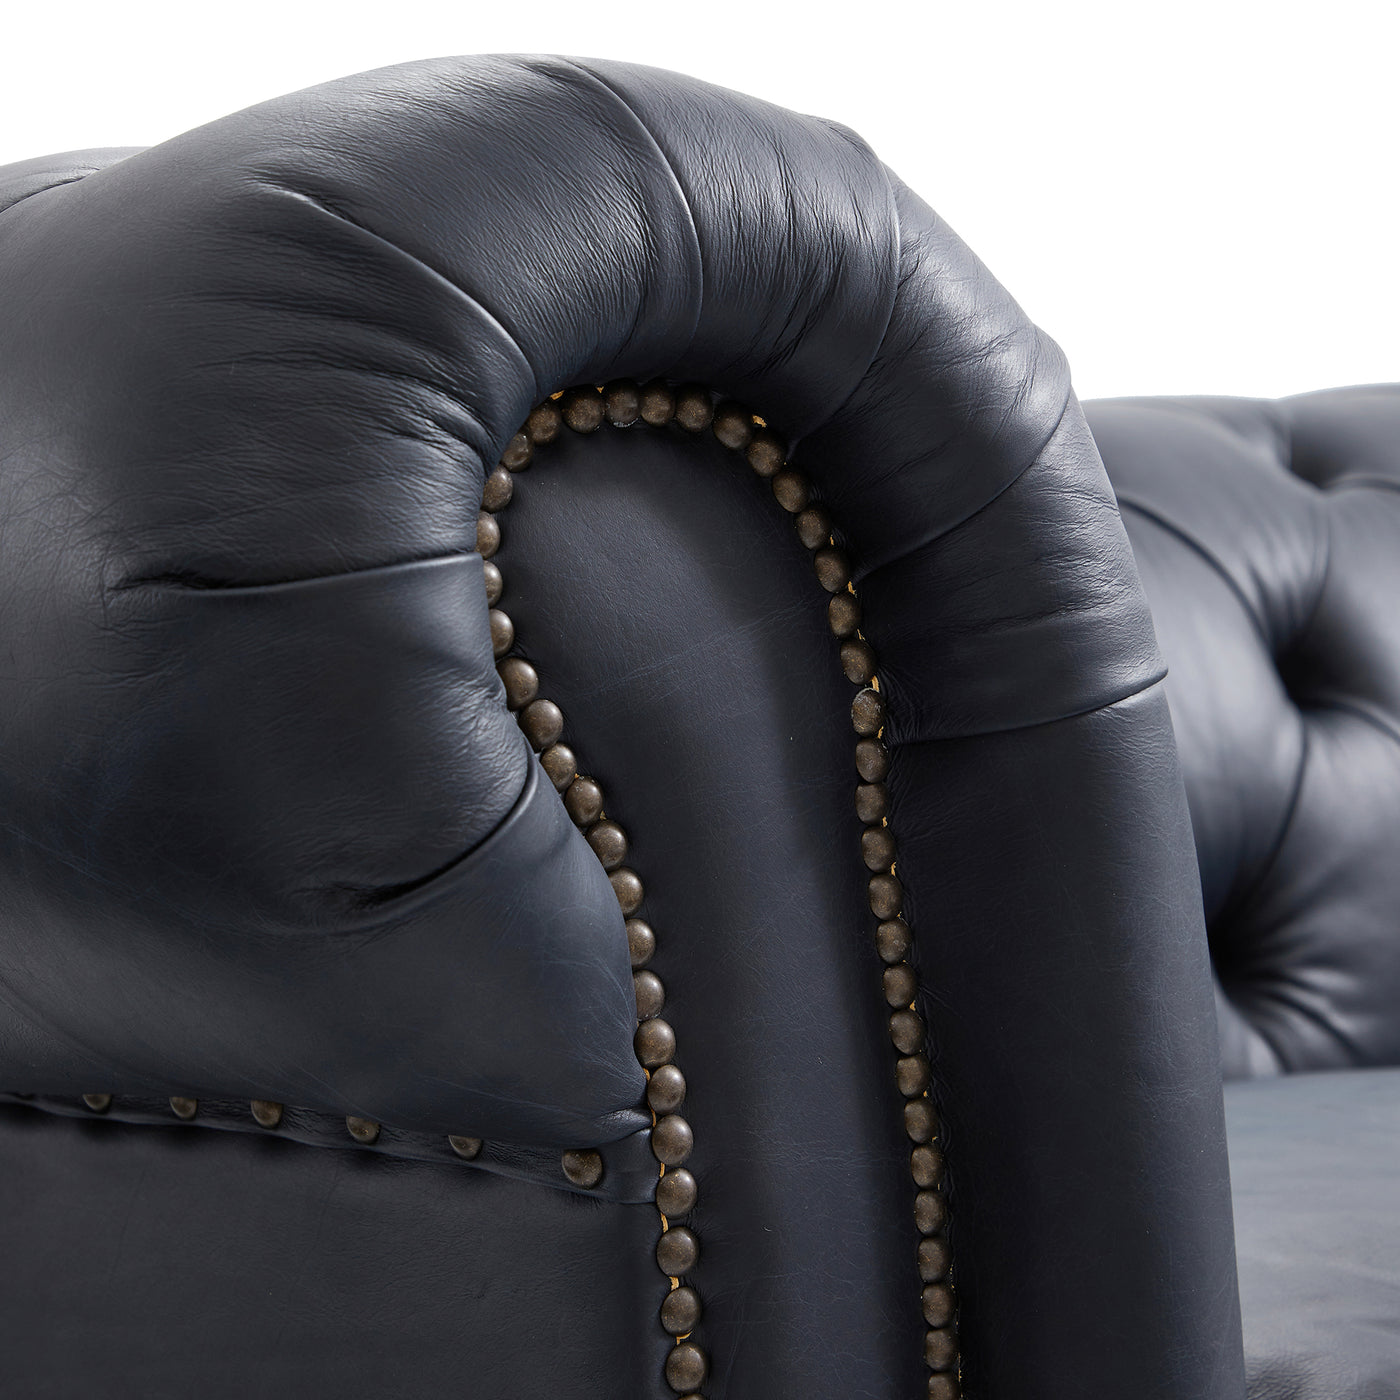 Durango Chesterfield Top Grain Leather Tufted Sofa-Black